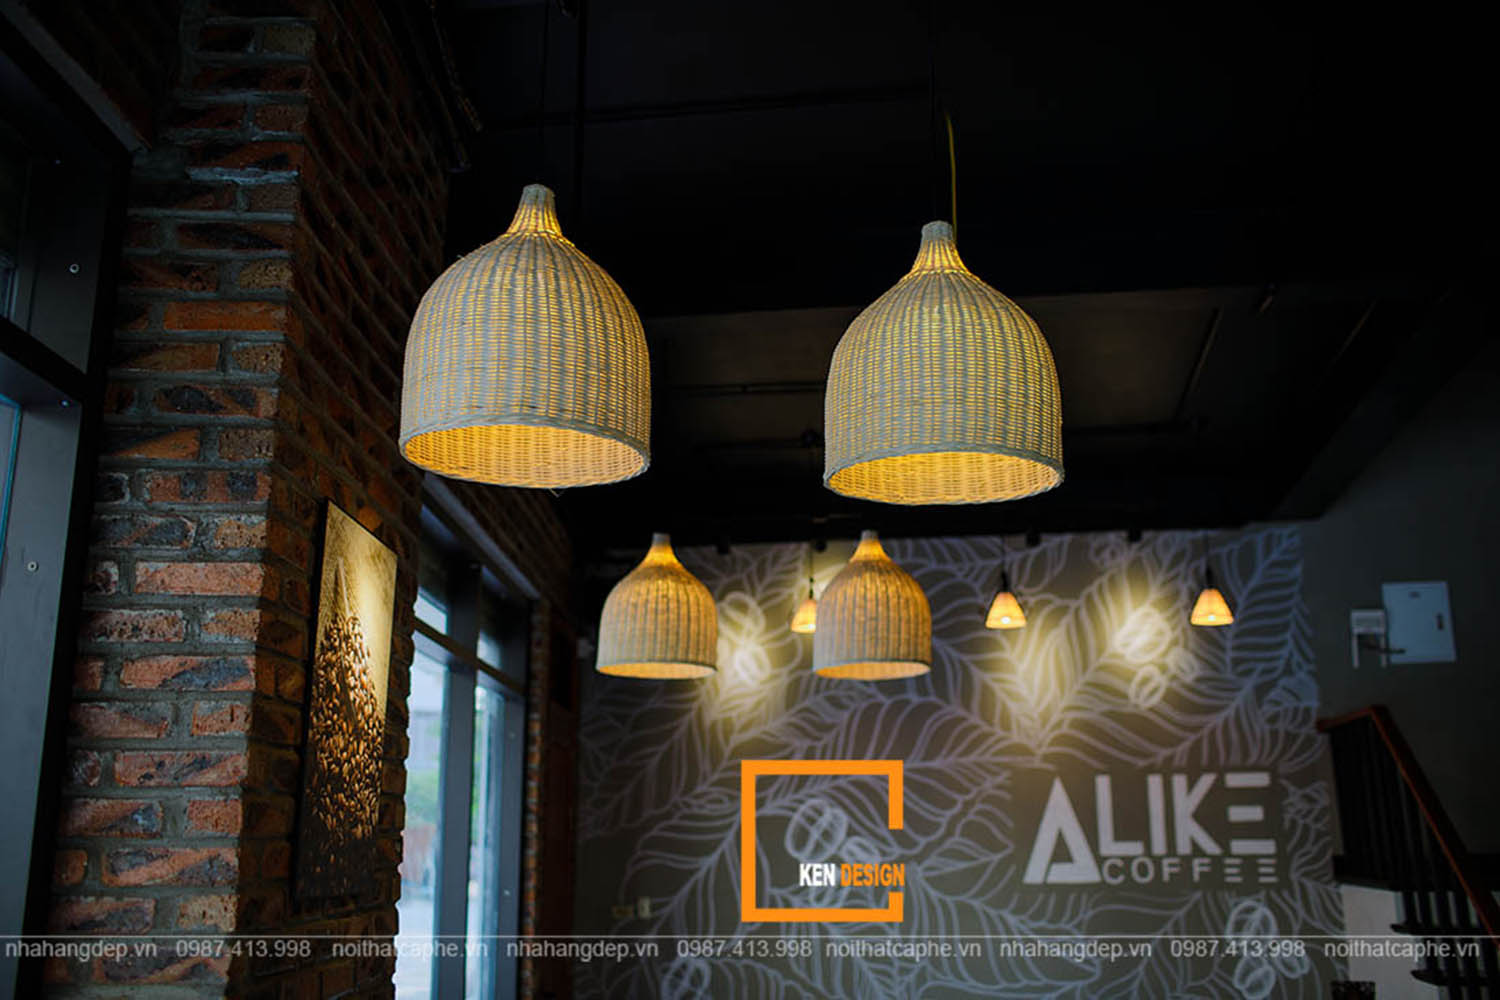 Construction of Alike Coffee Shop